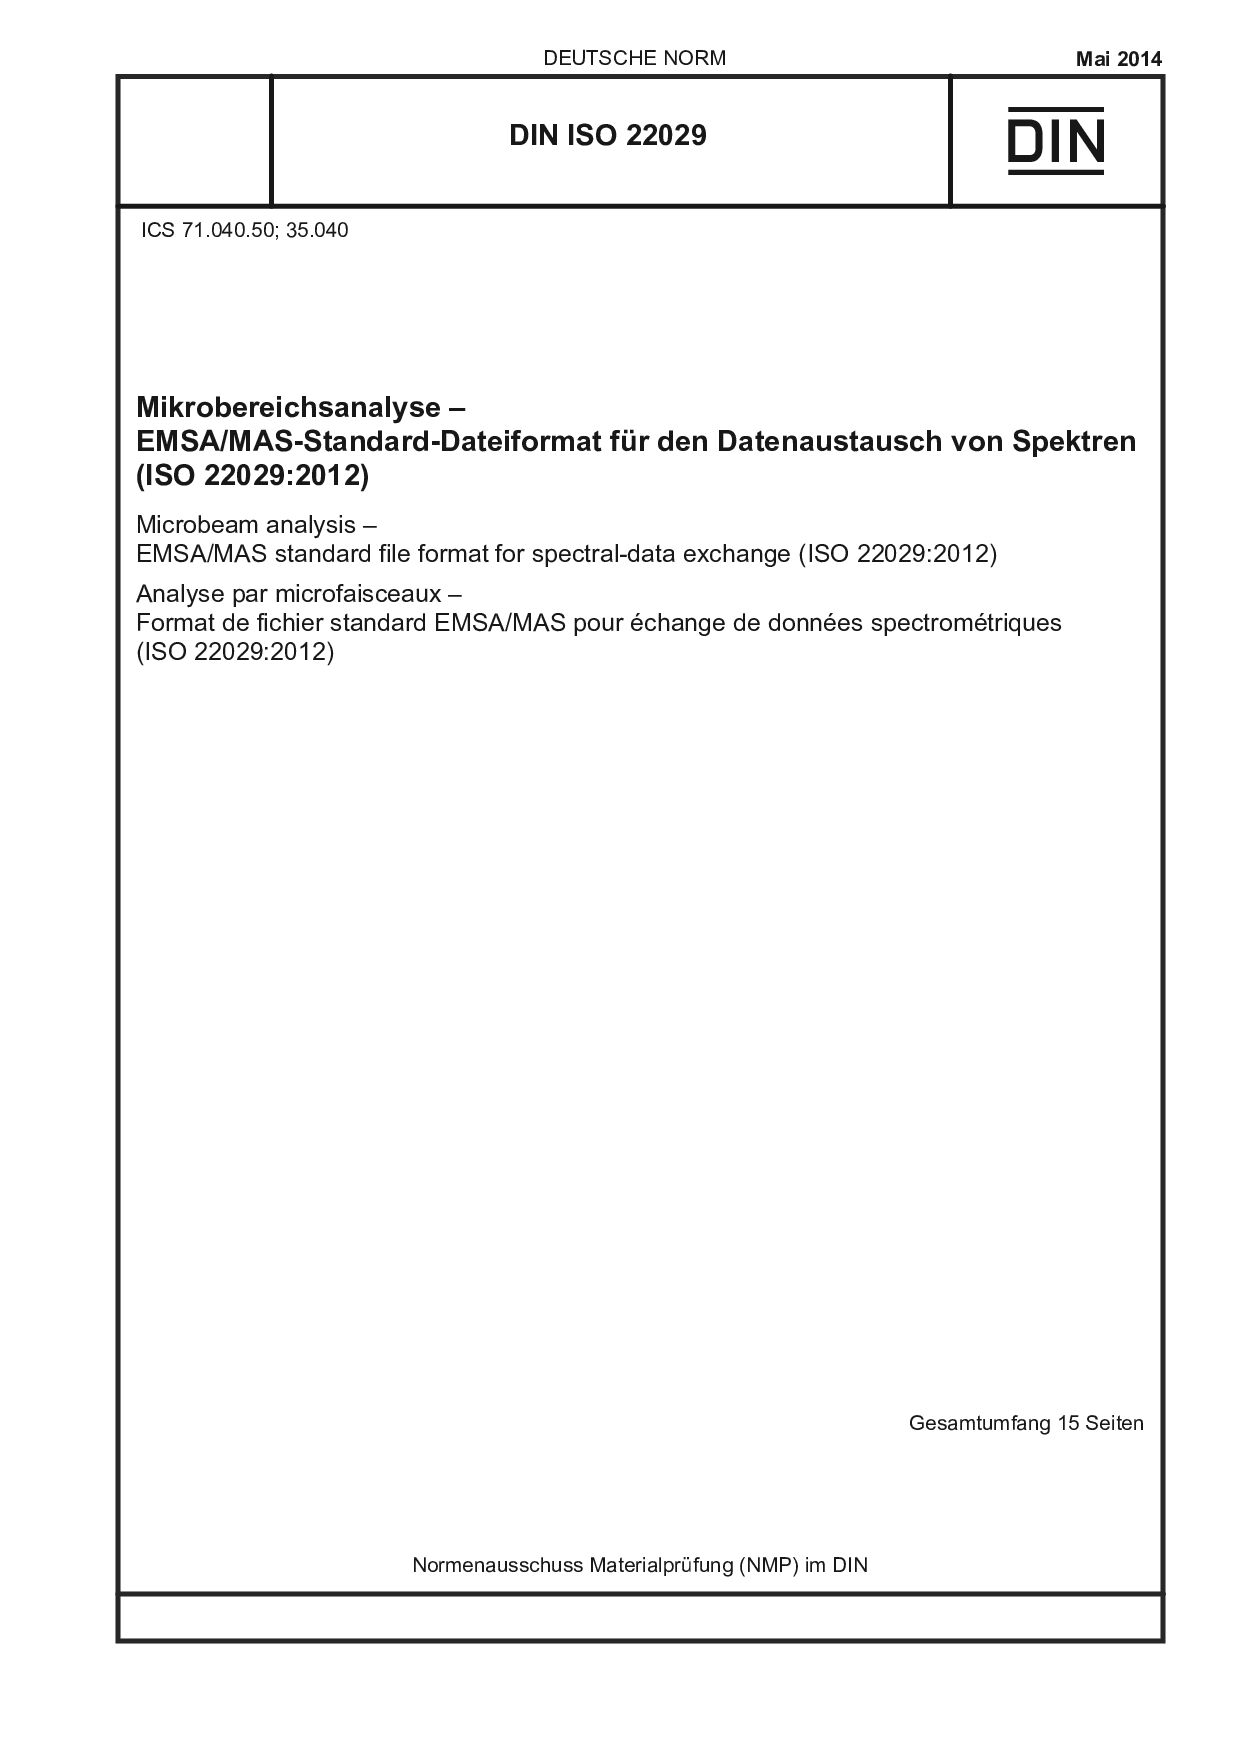 DIN ISO 22029:2014-05